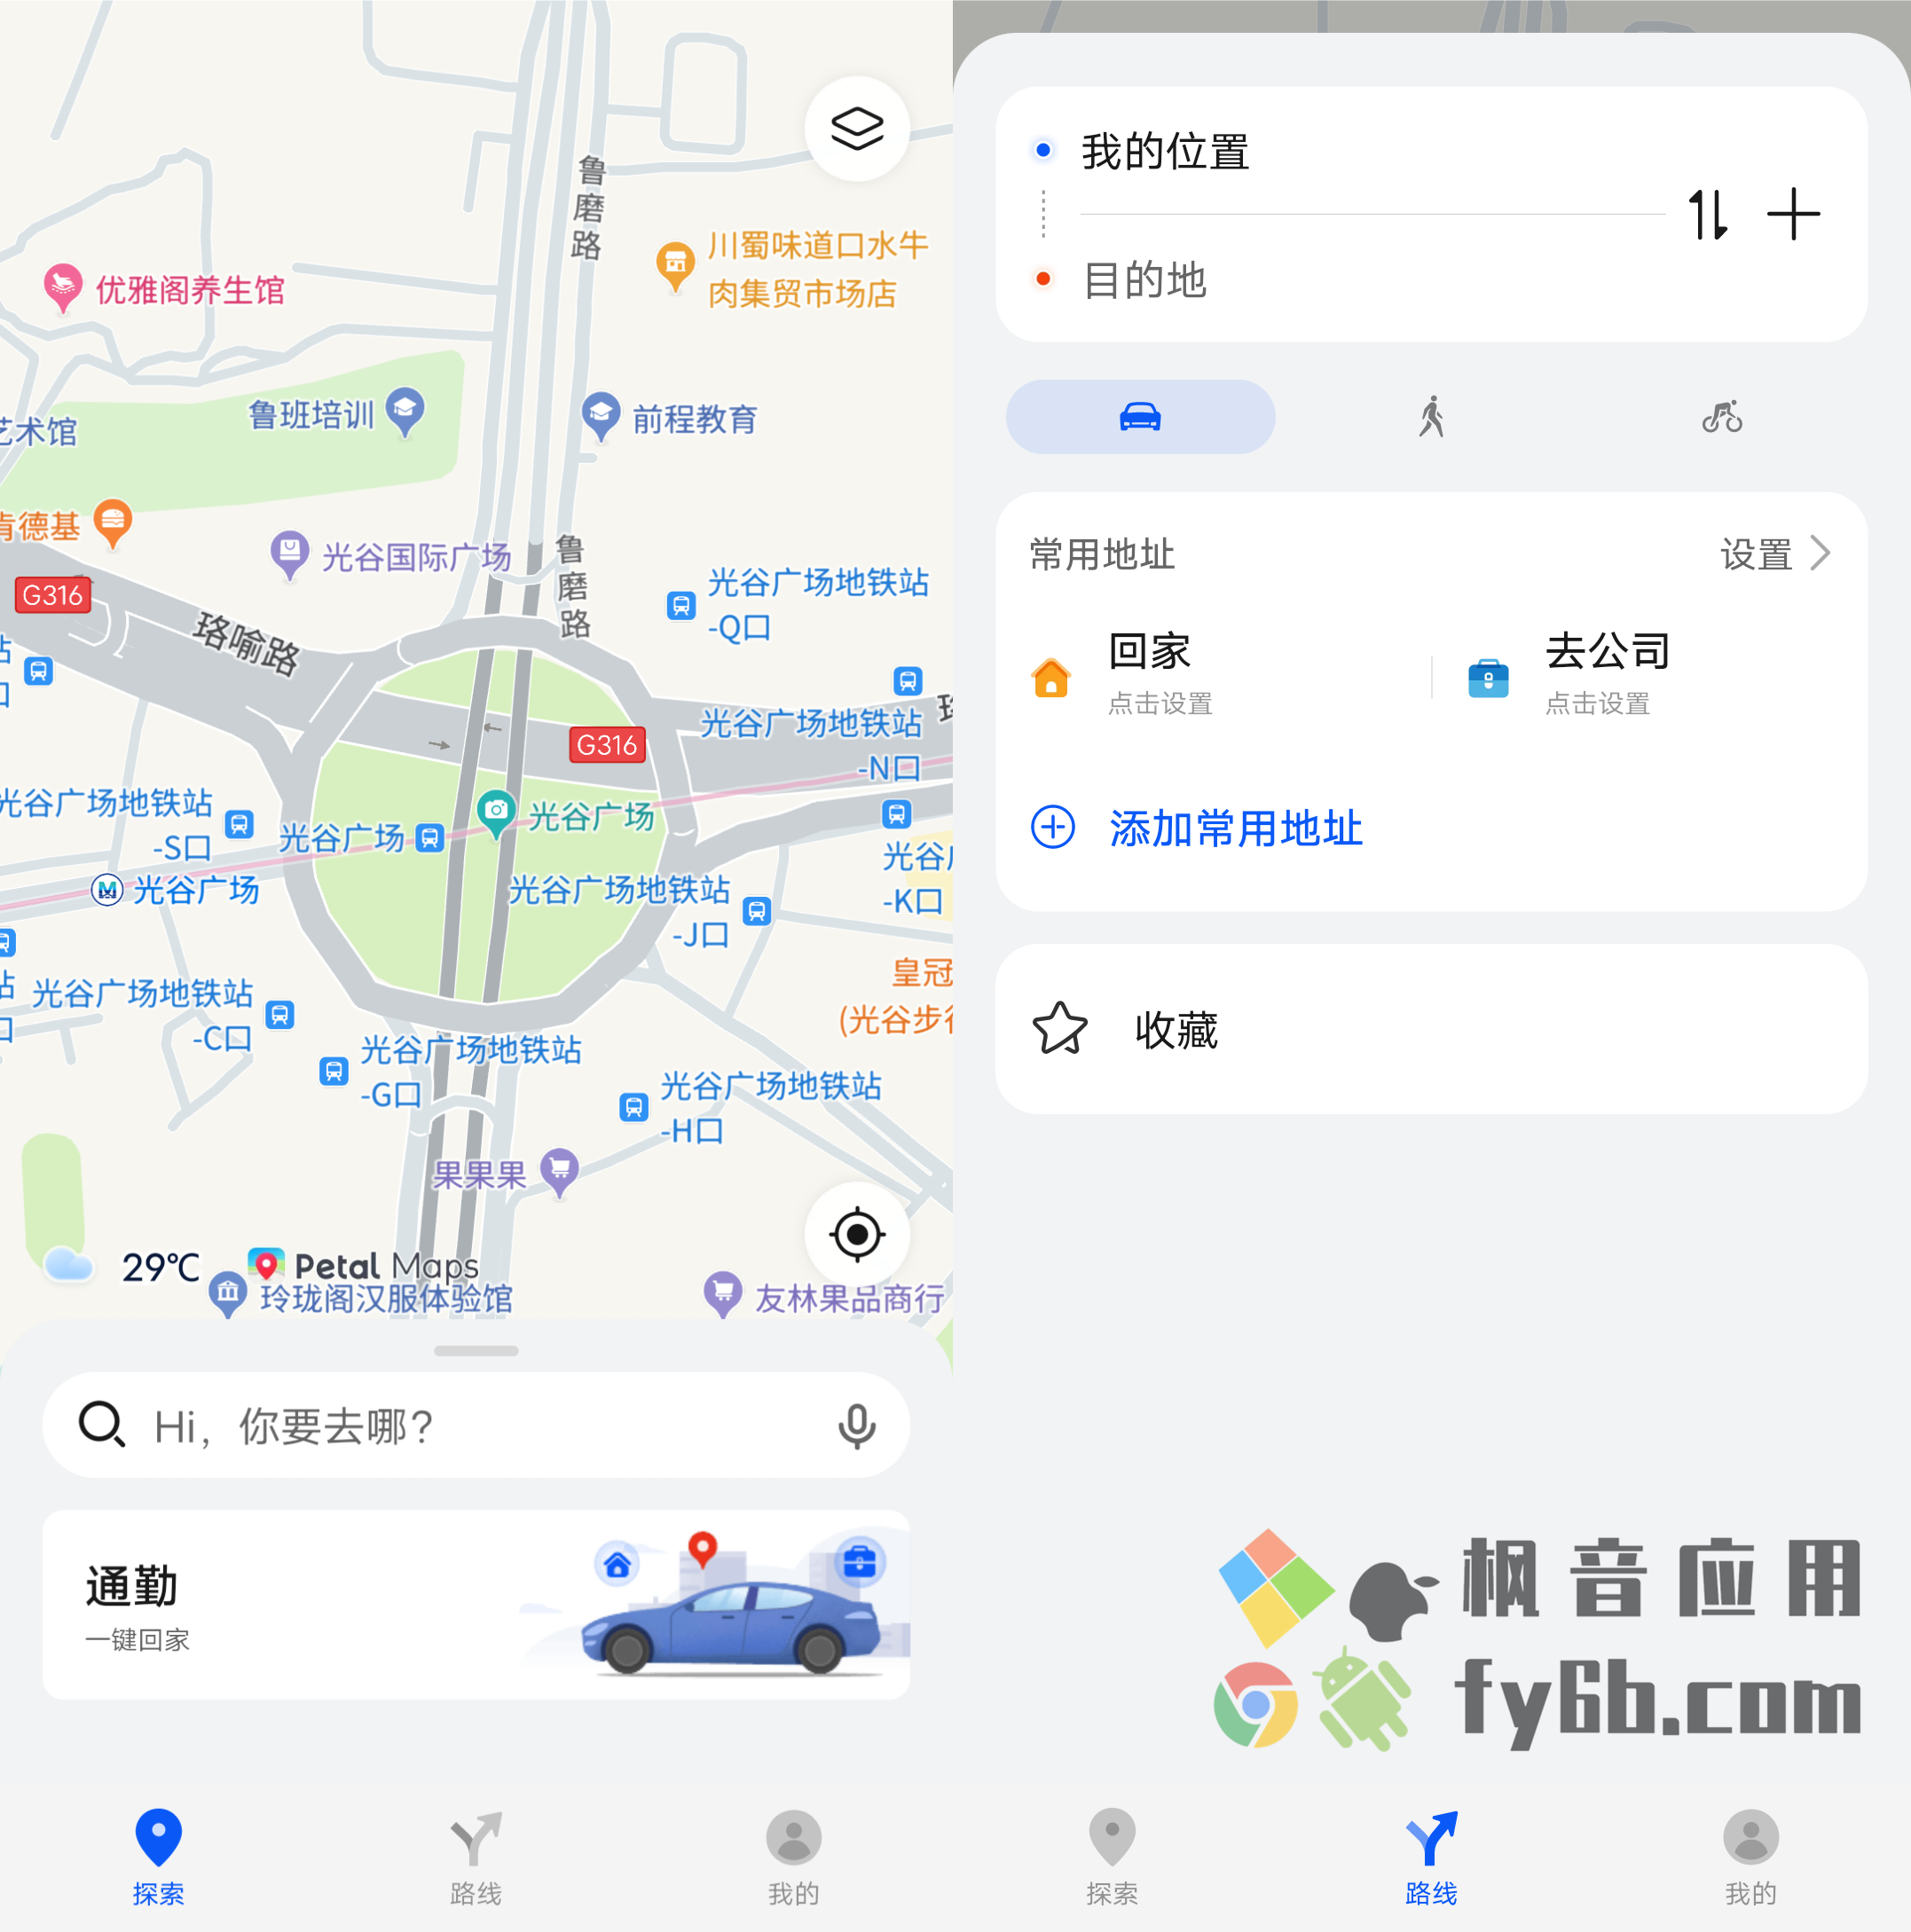 Android 华为Petal Map 花瓣地图_v3.6.0